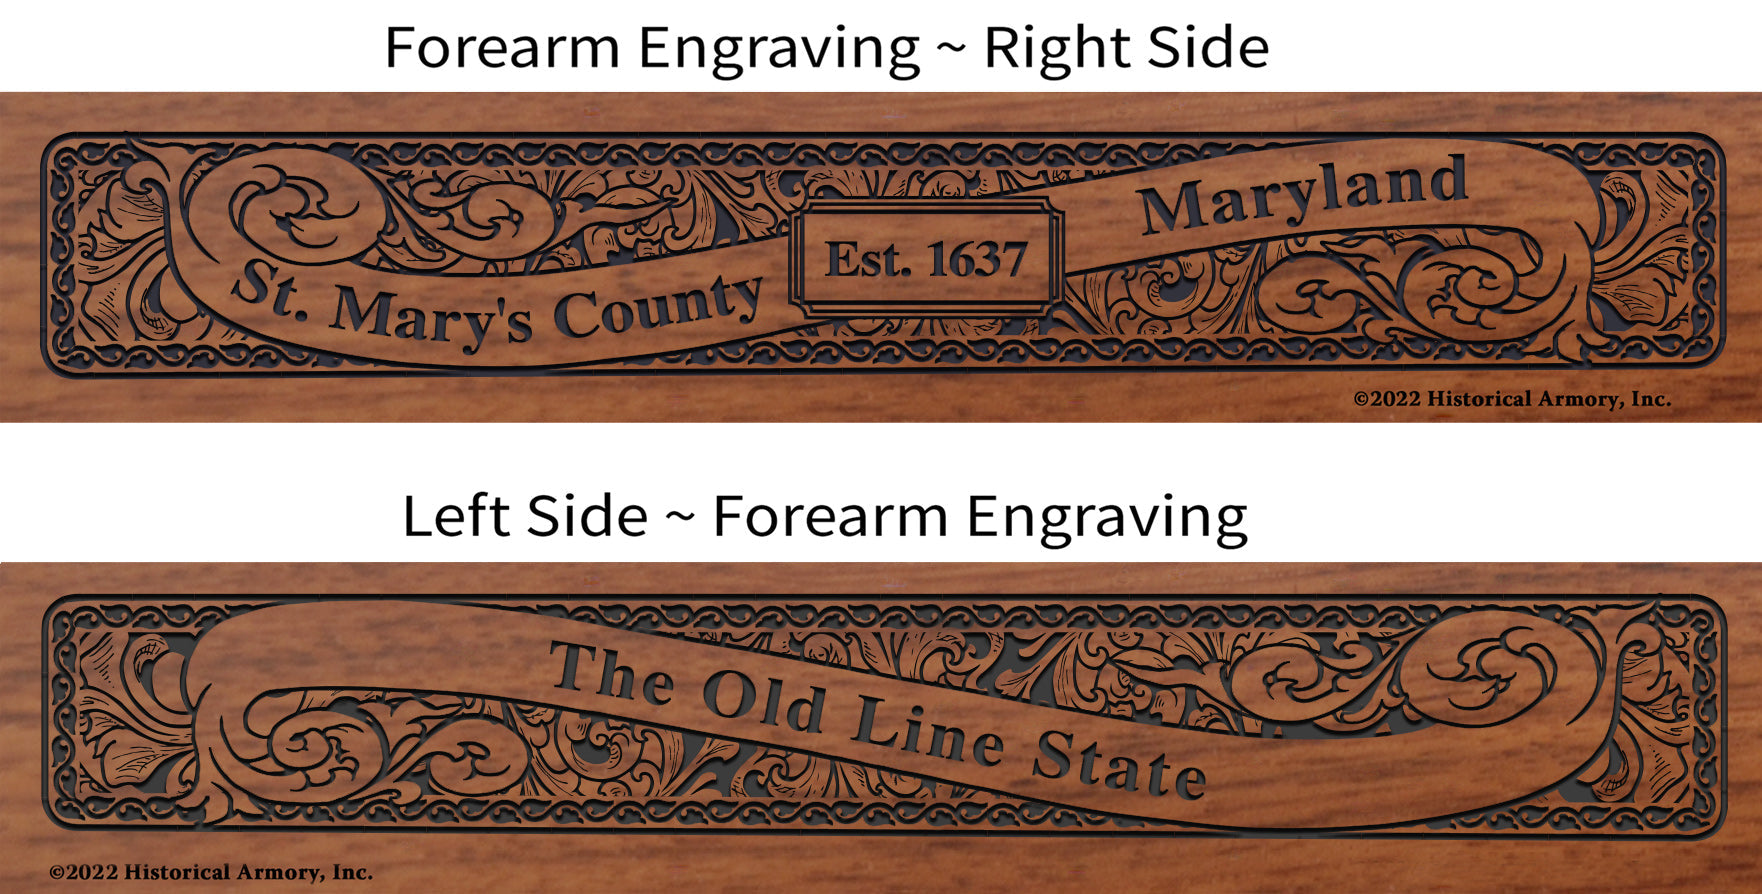 St. Marys County Maryland Engraved Rifle Forearm